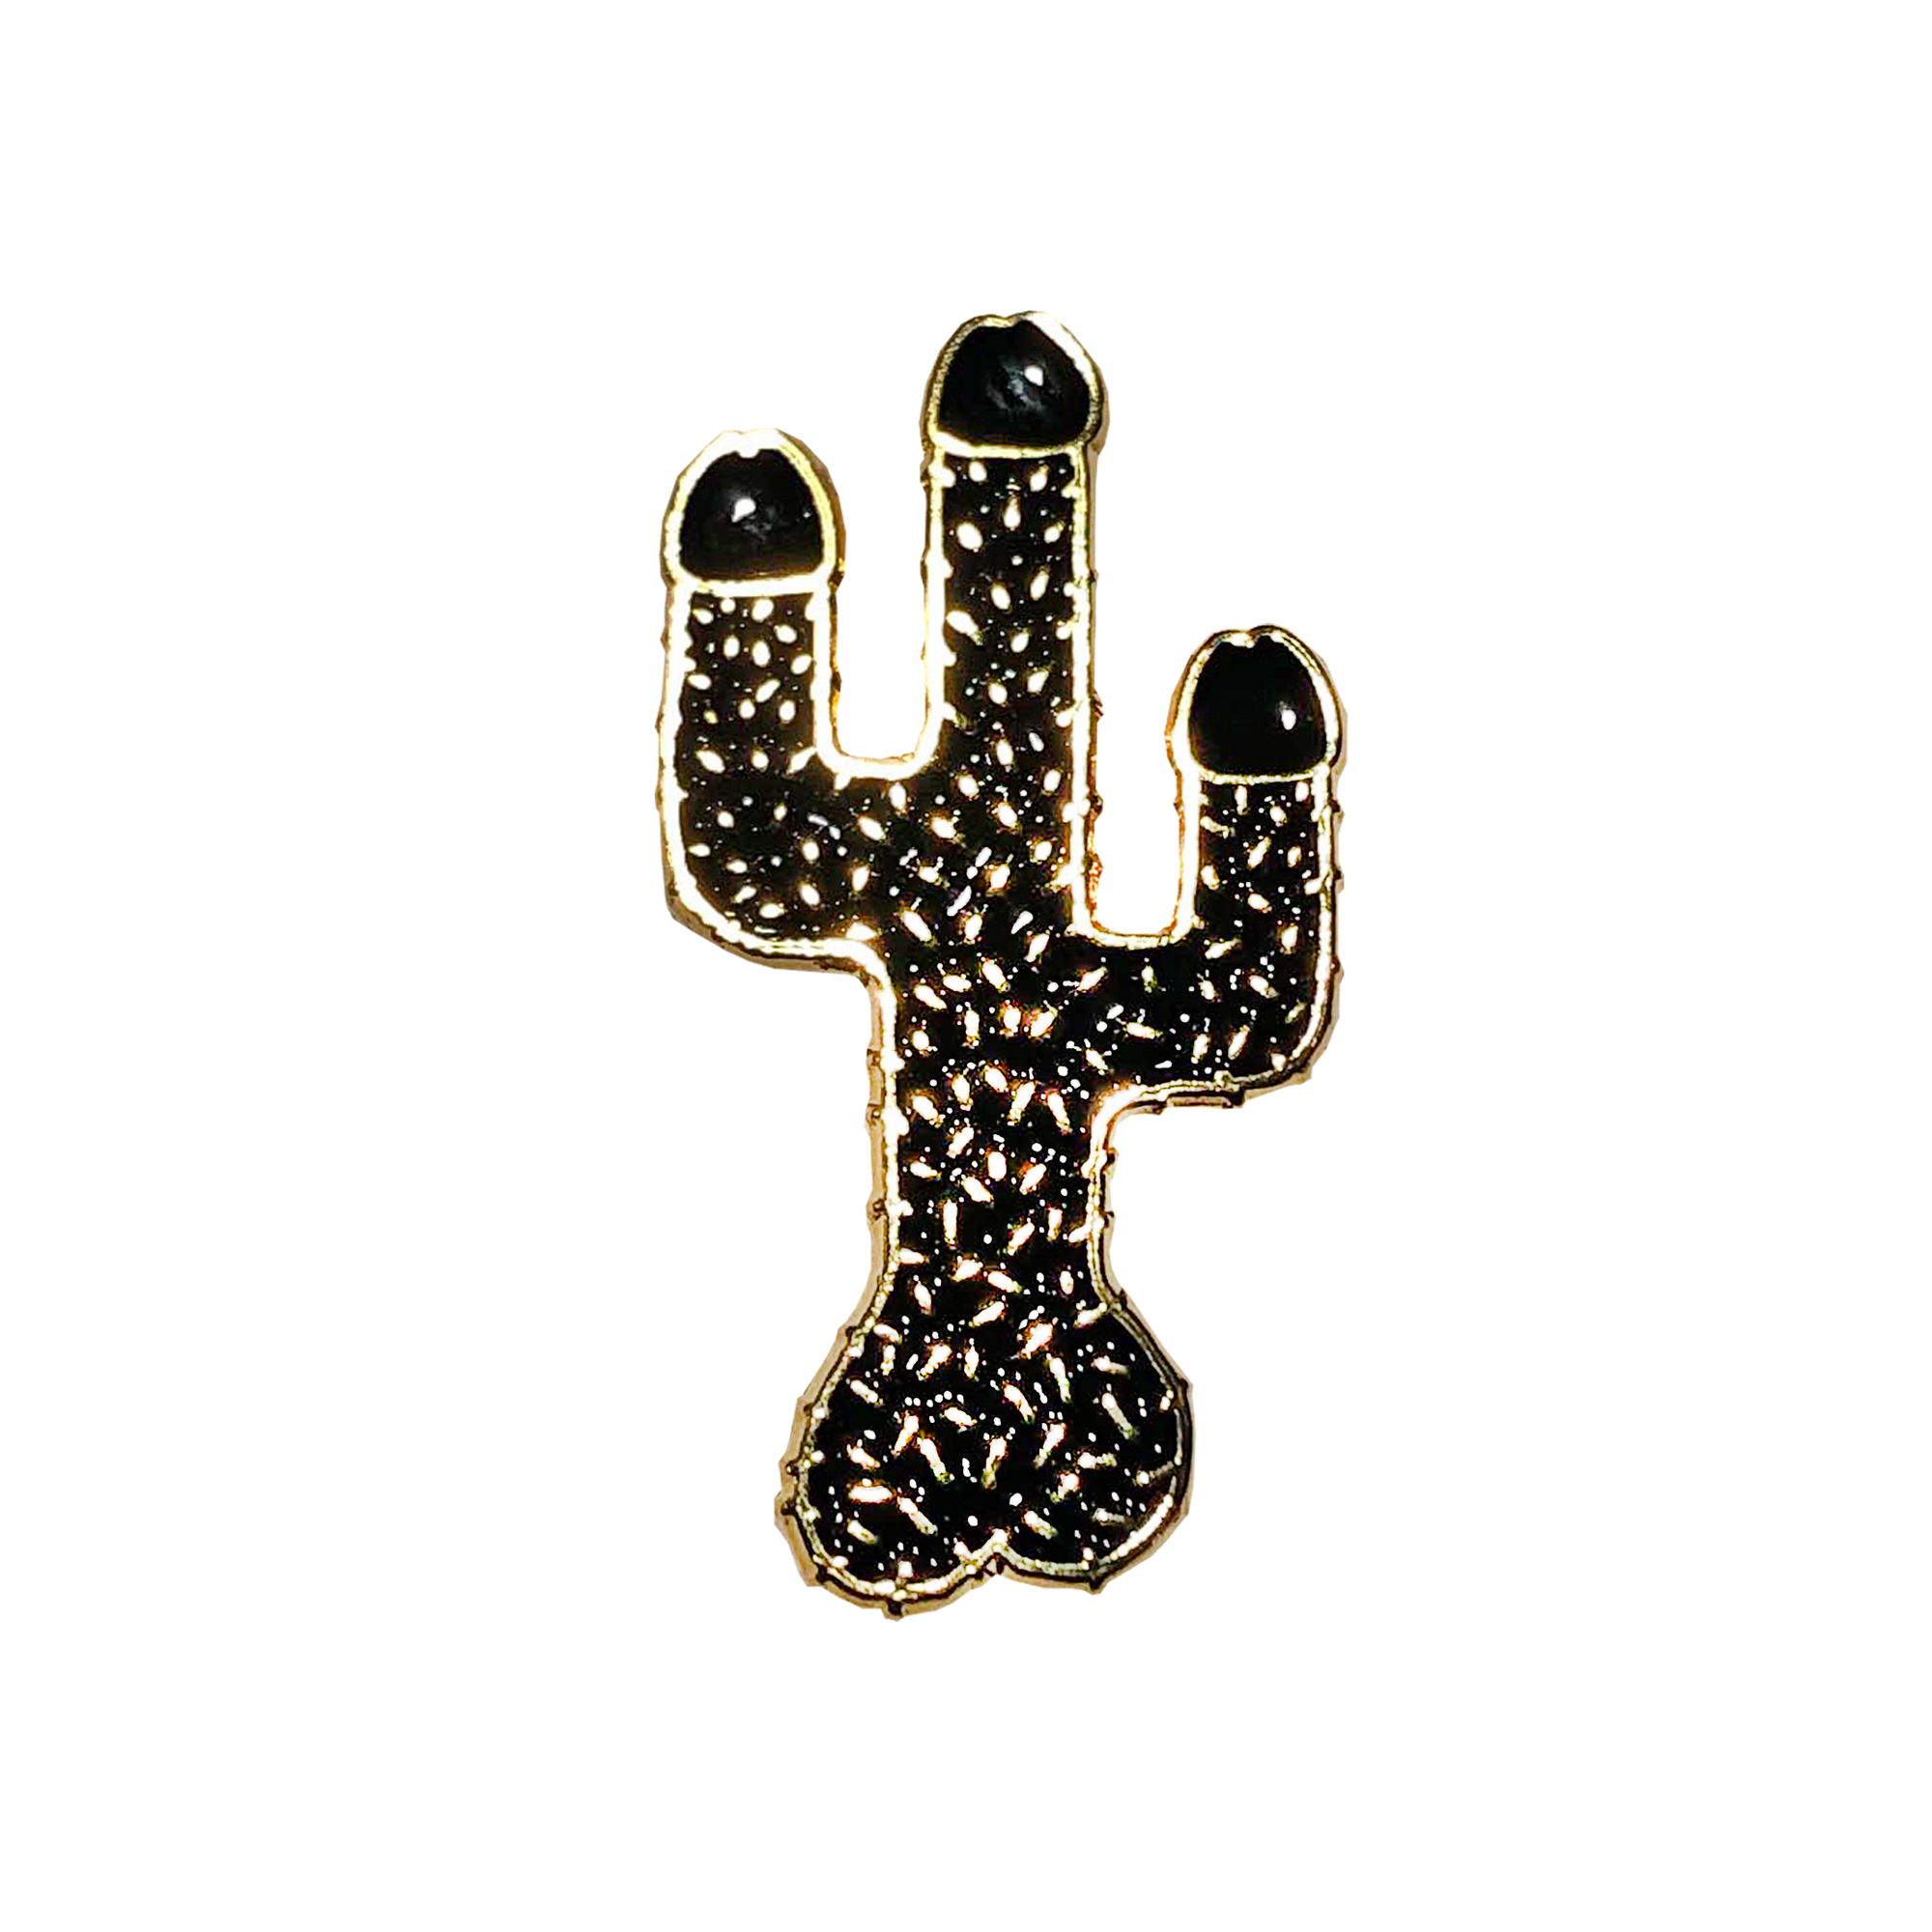 Funny Cactus Pin